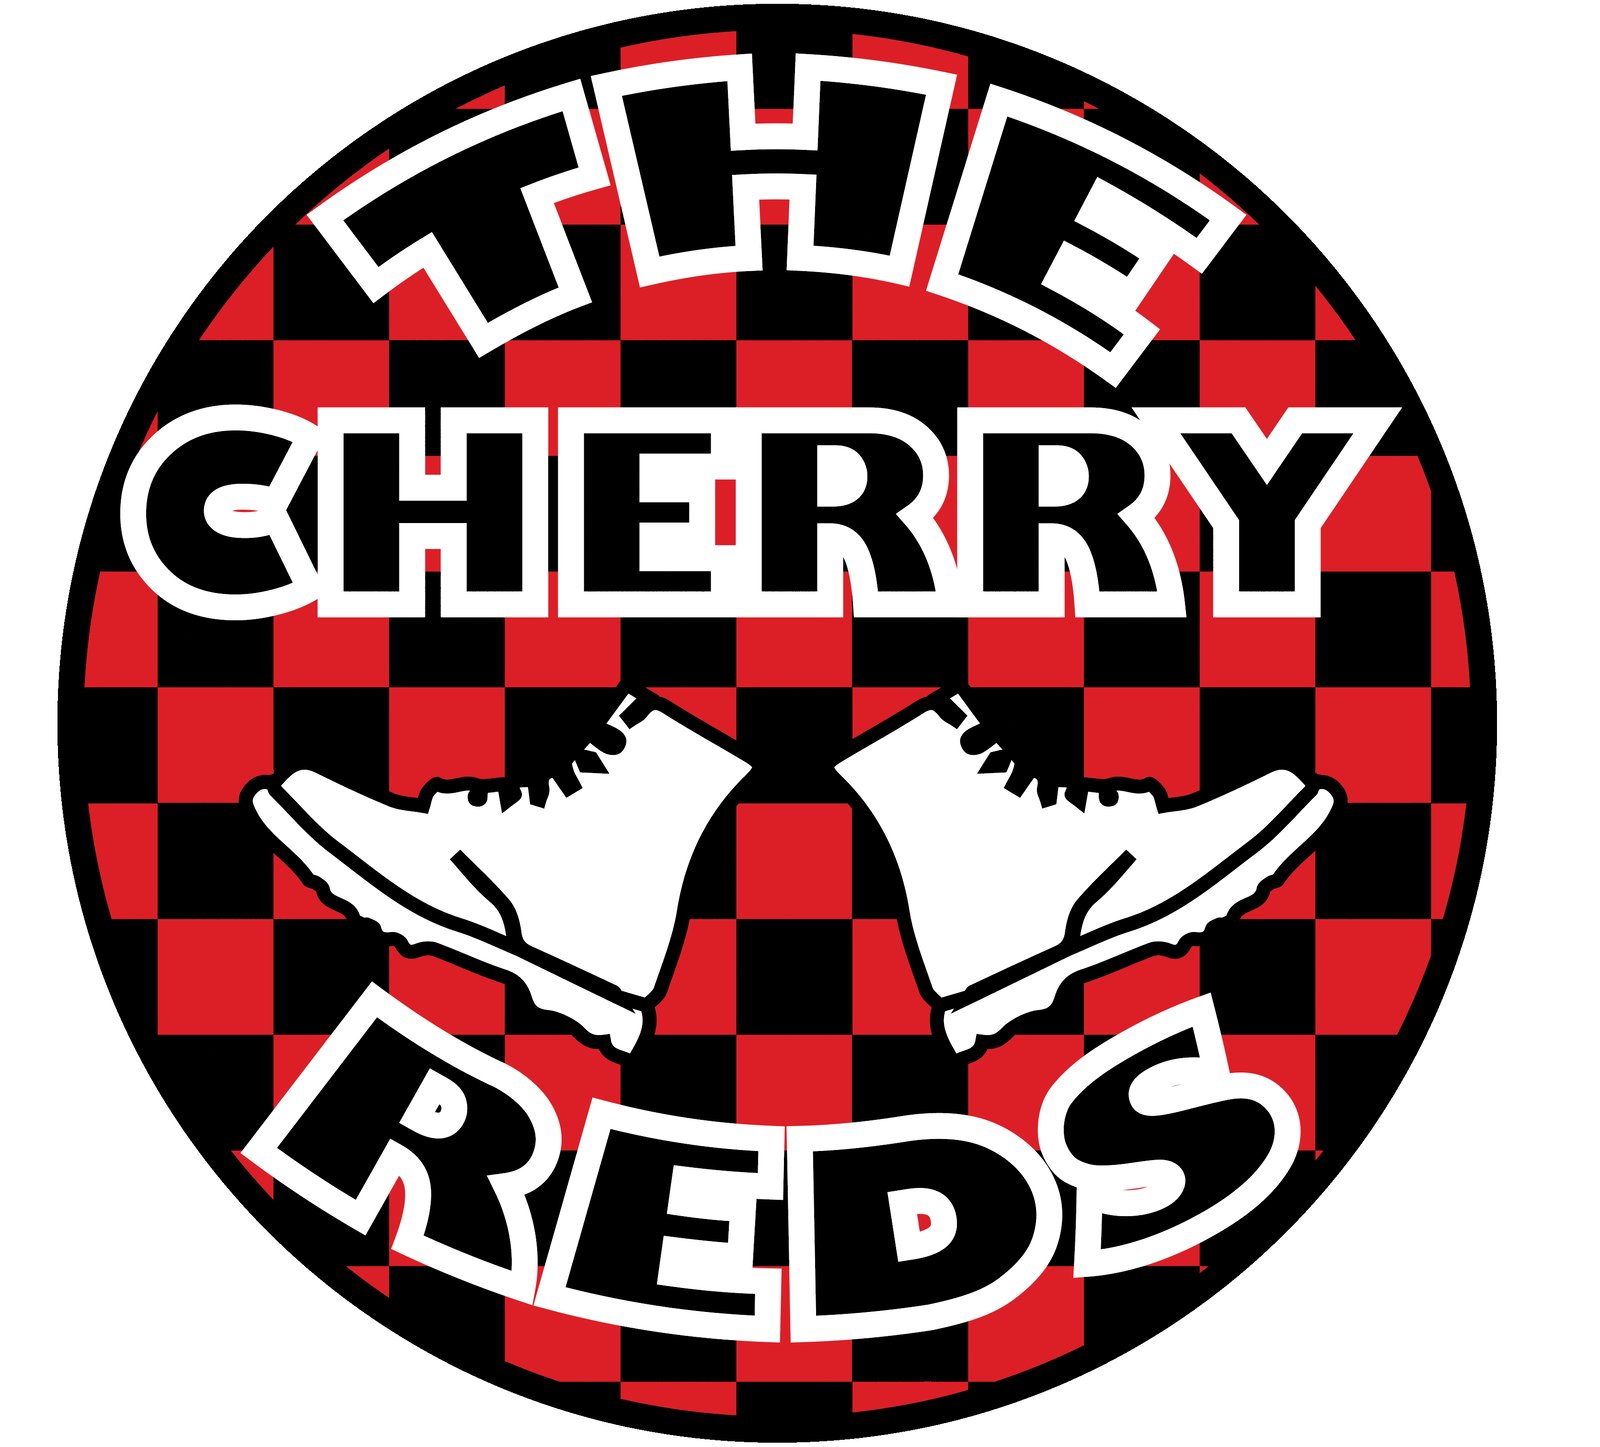 The Cherry Reds